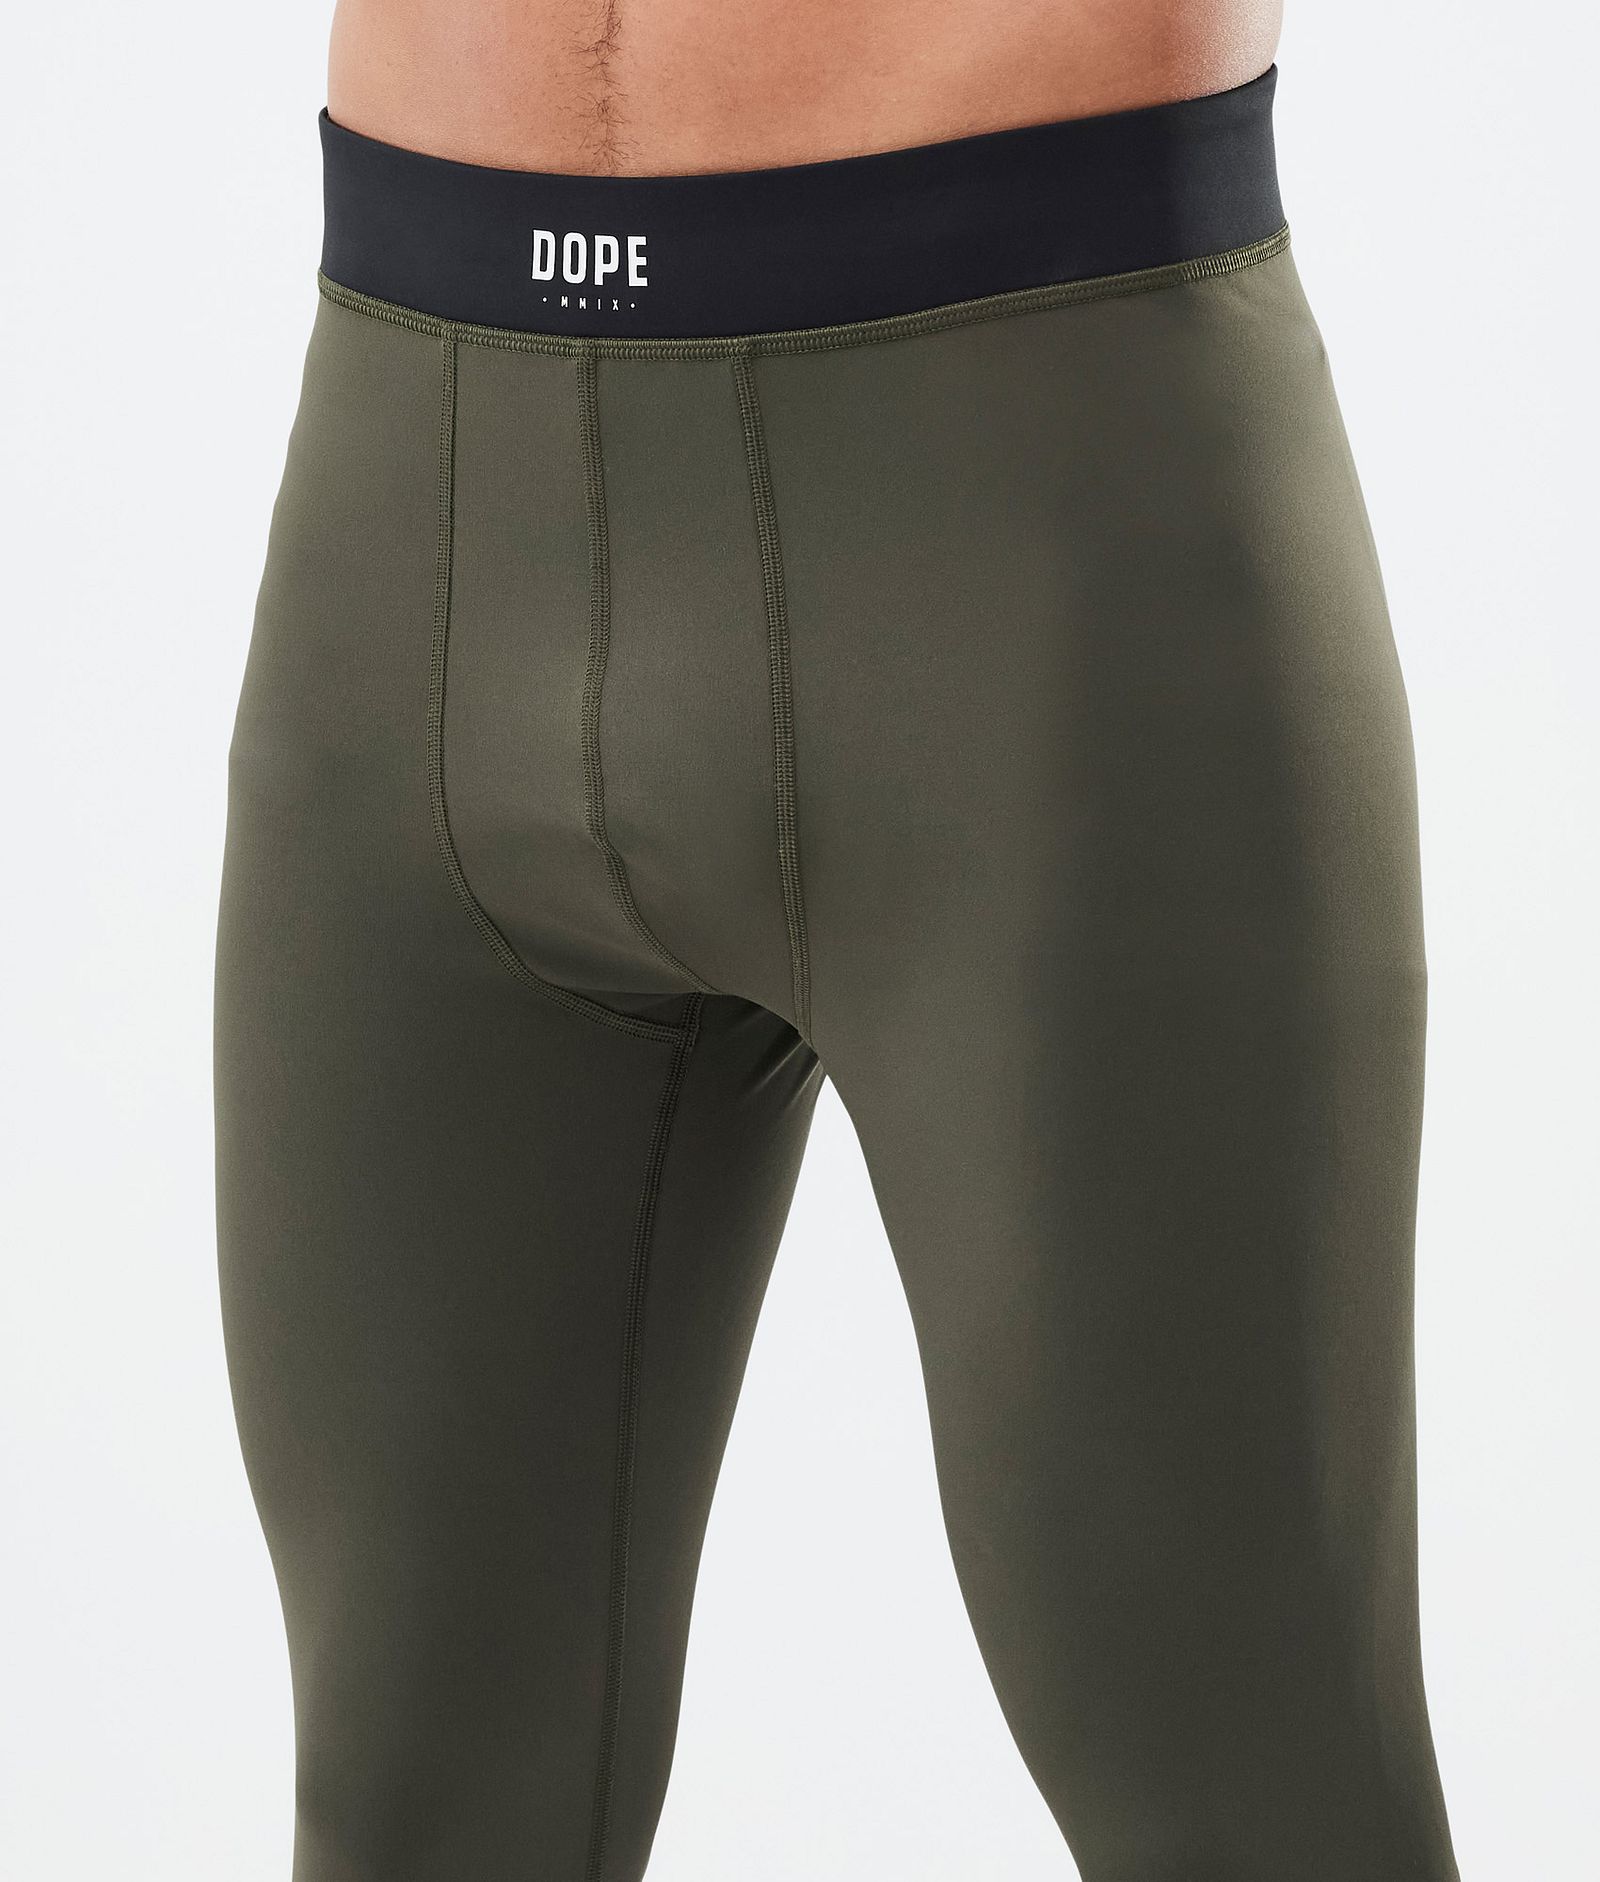 Dope Snuggle Pantaloni Termici Uomo 2X-Up Olive Green